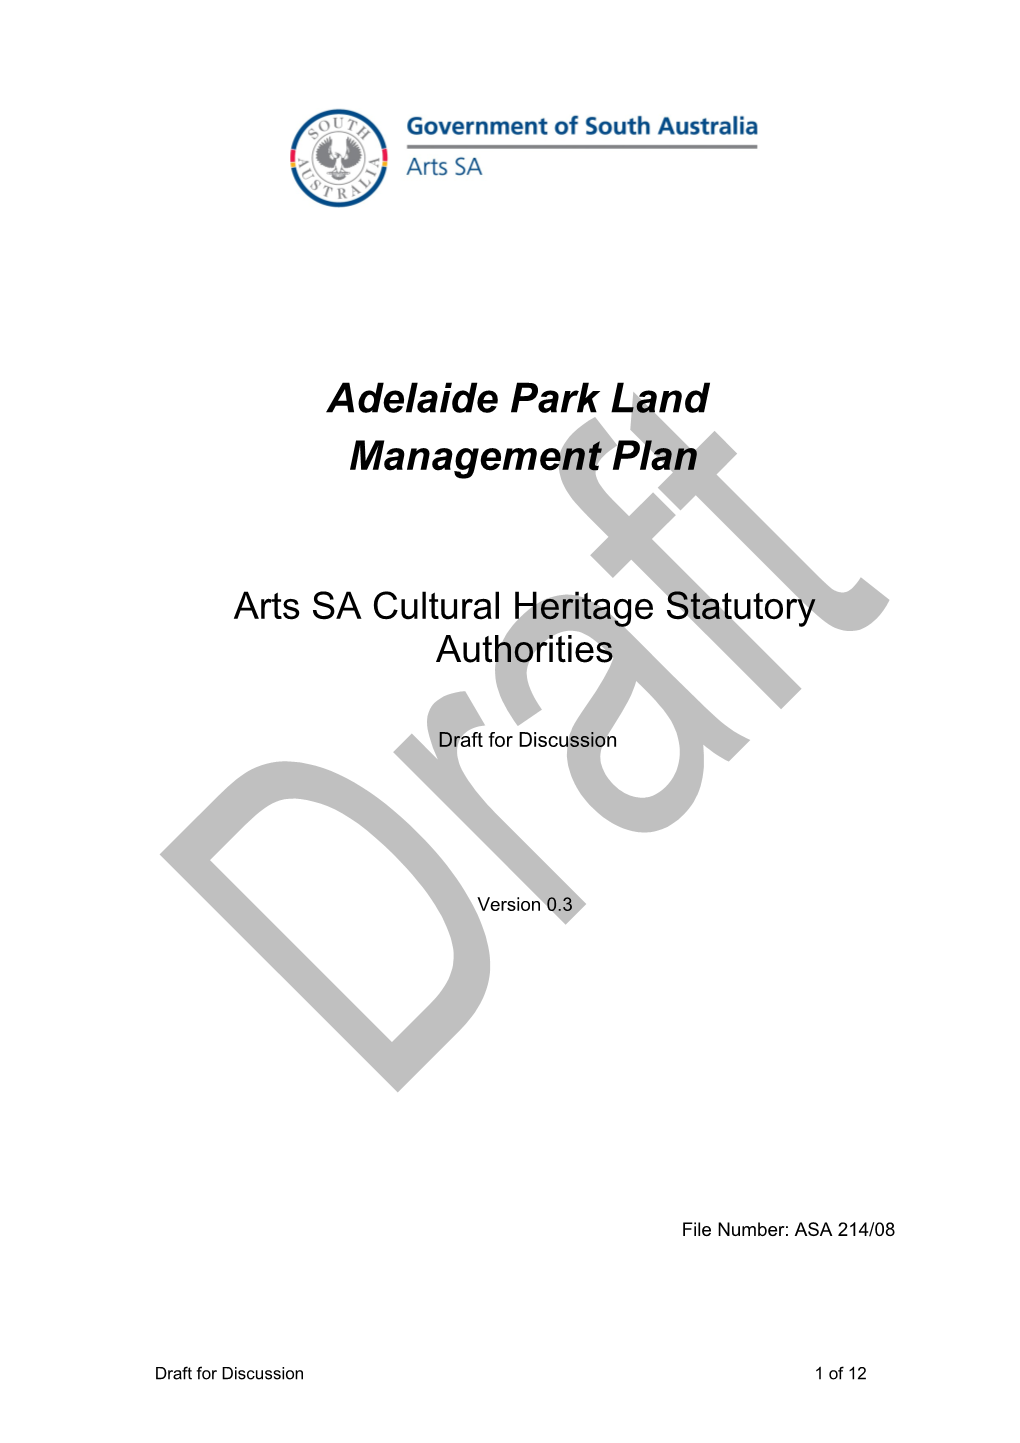 Adelaide Park Land Management Plan